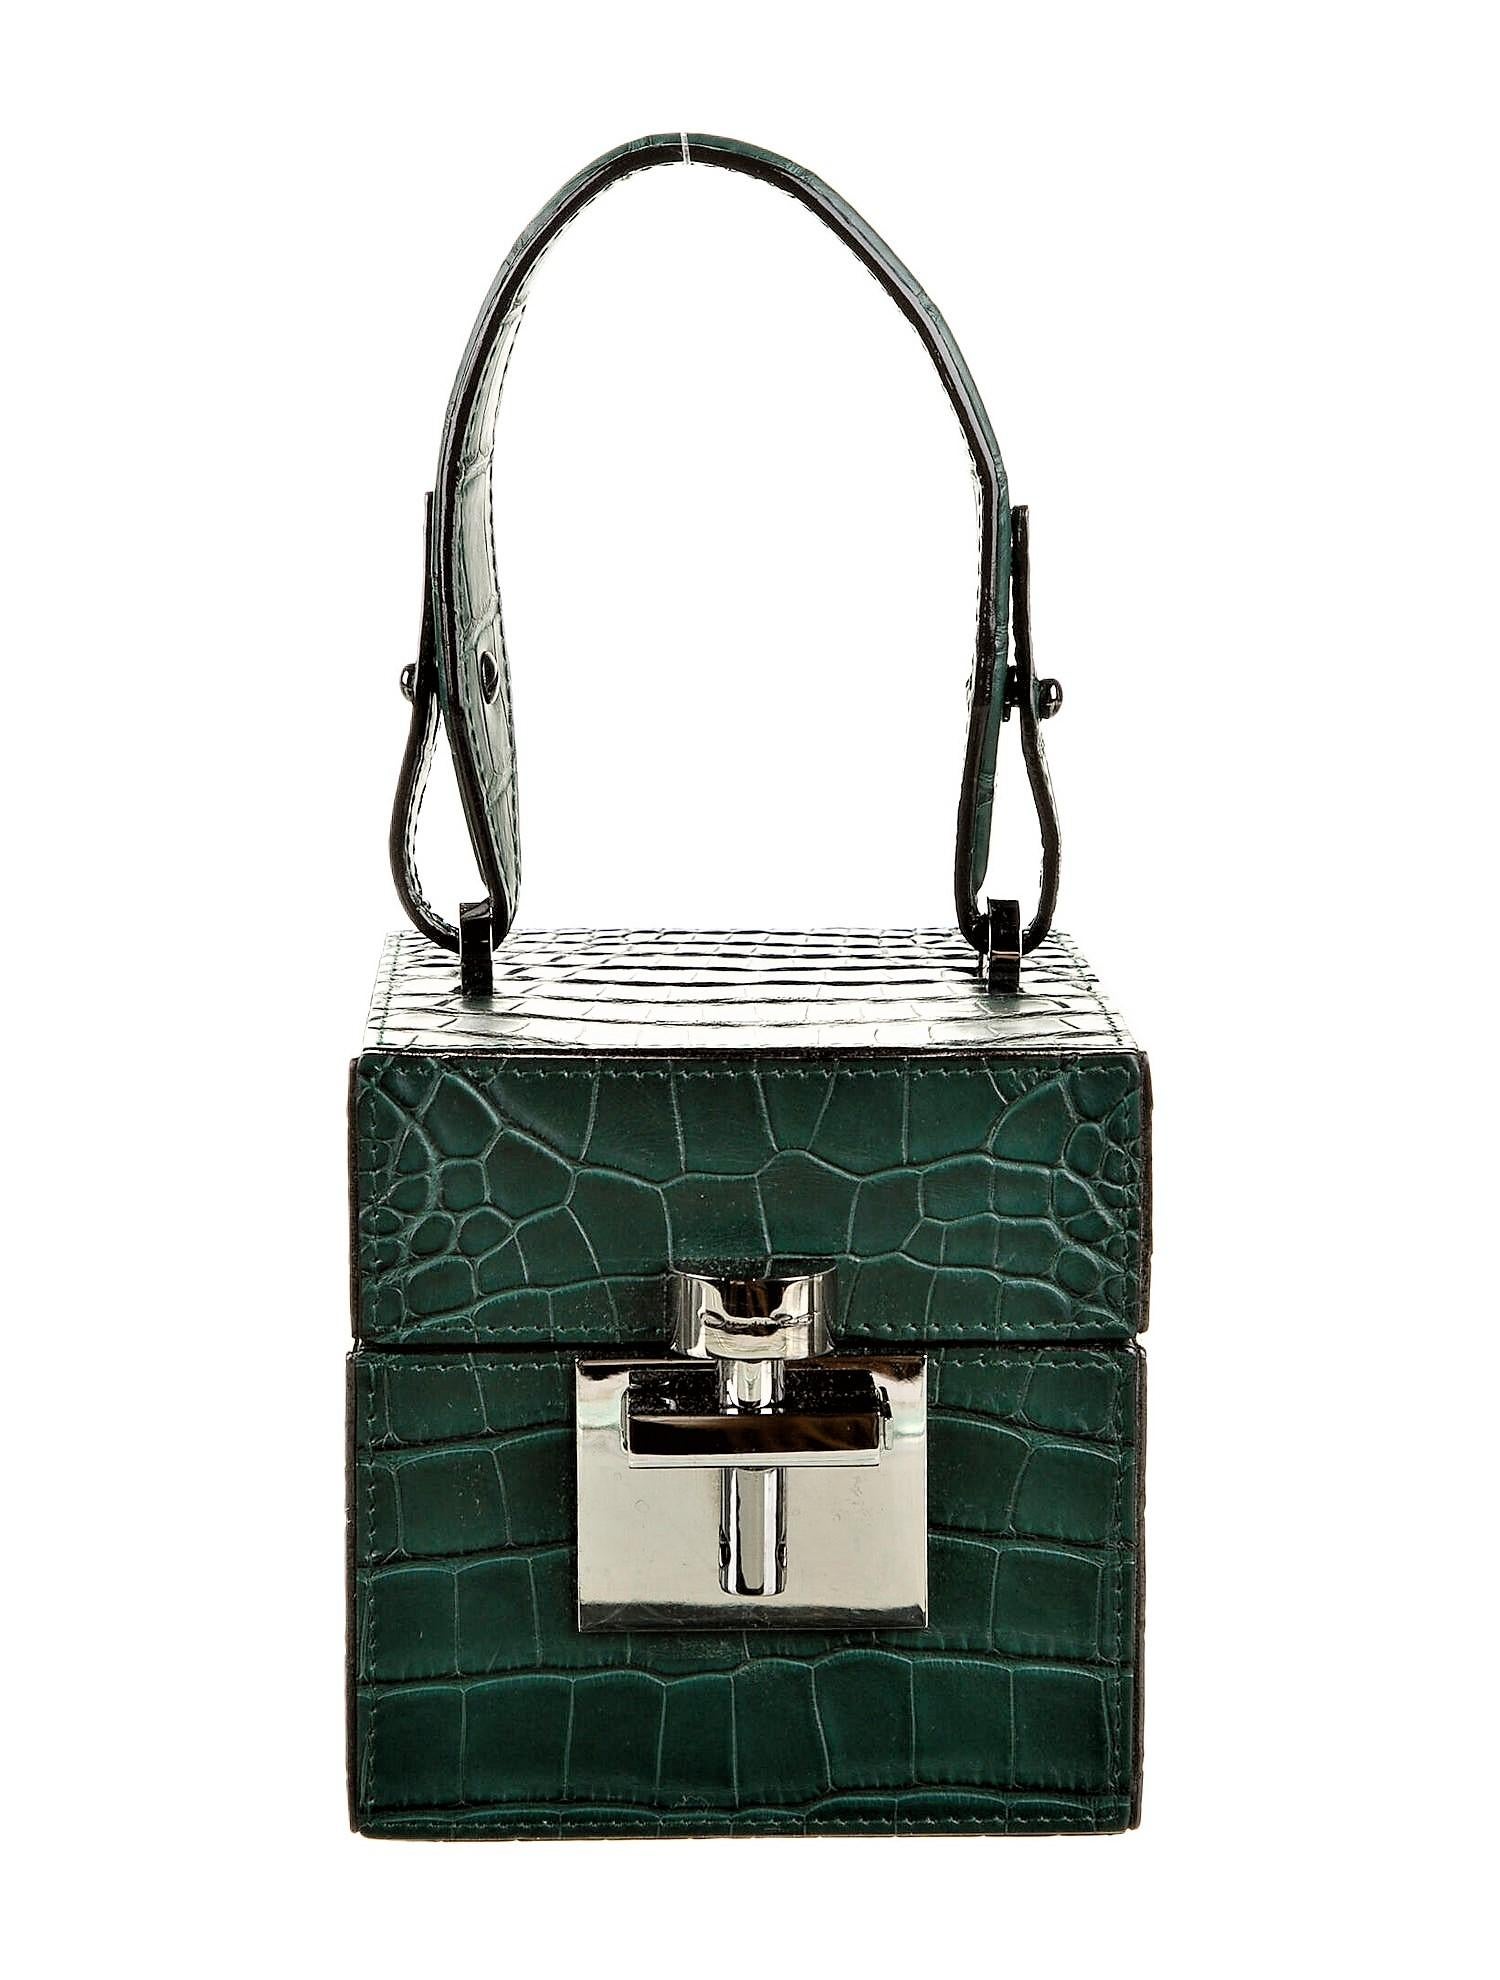 Neu $9690 Oscar De La Renta Alibi-Tasche aus grünem Alligator mit Box und Etiketten  6